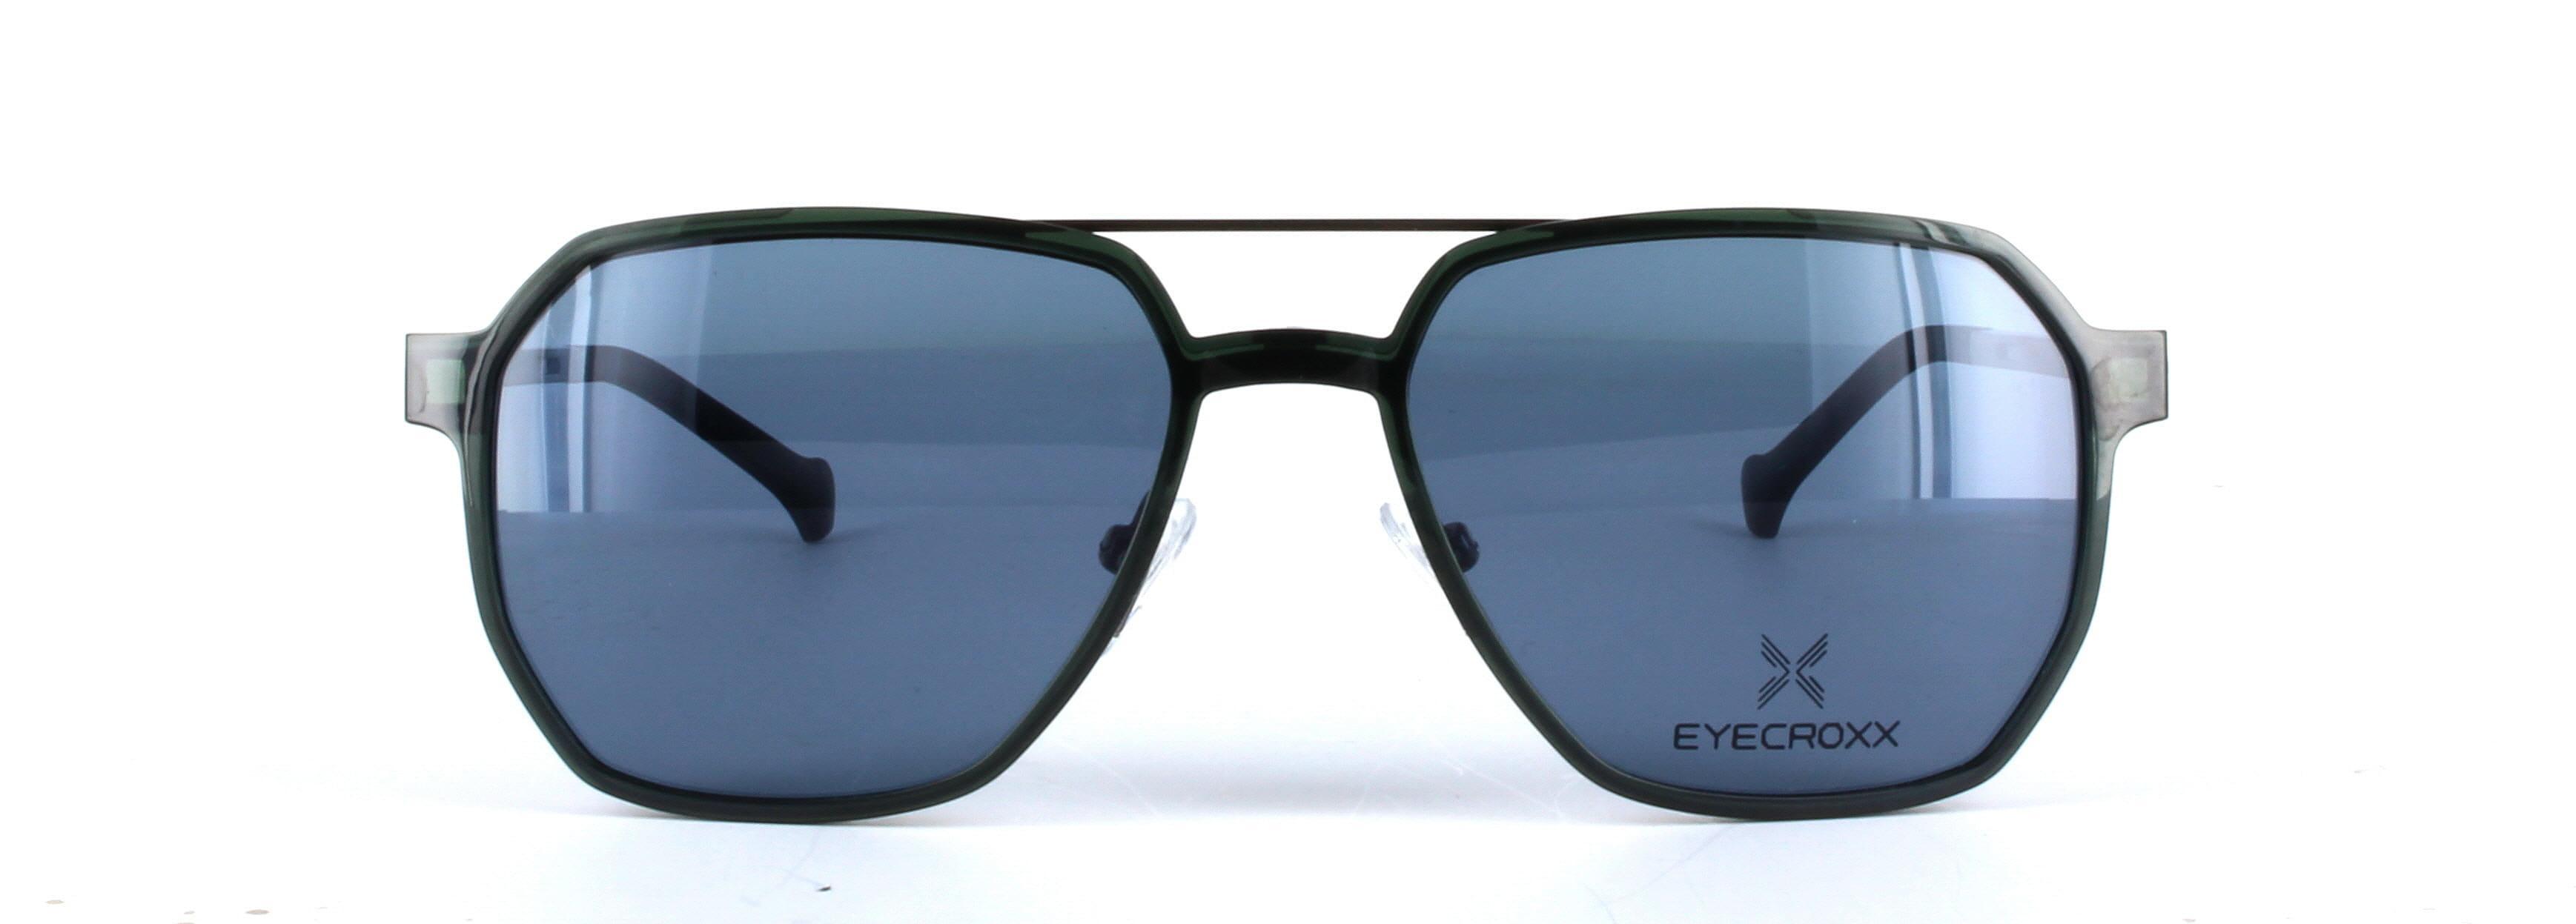 Eyecroxx 617-C3 Gunmetal Full Rim Aviator Metal Glasses - Image View 5